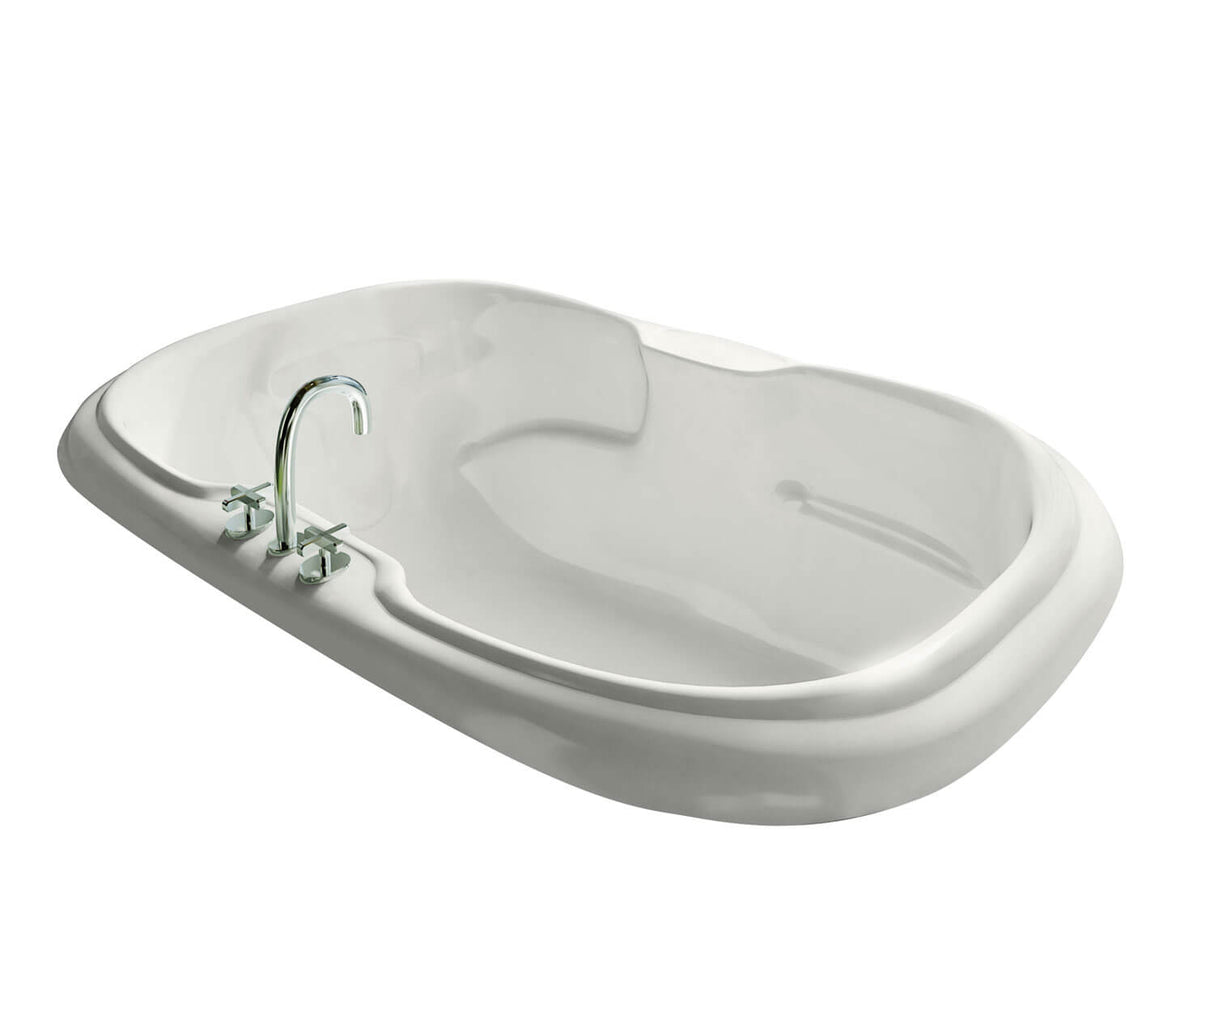 MAAX 101058-004-001-100 Calla 6042 Acrylic Drop-in Center Drain Hydromax Bathtub in White